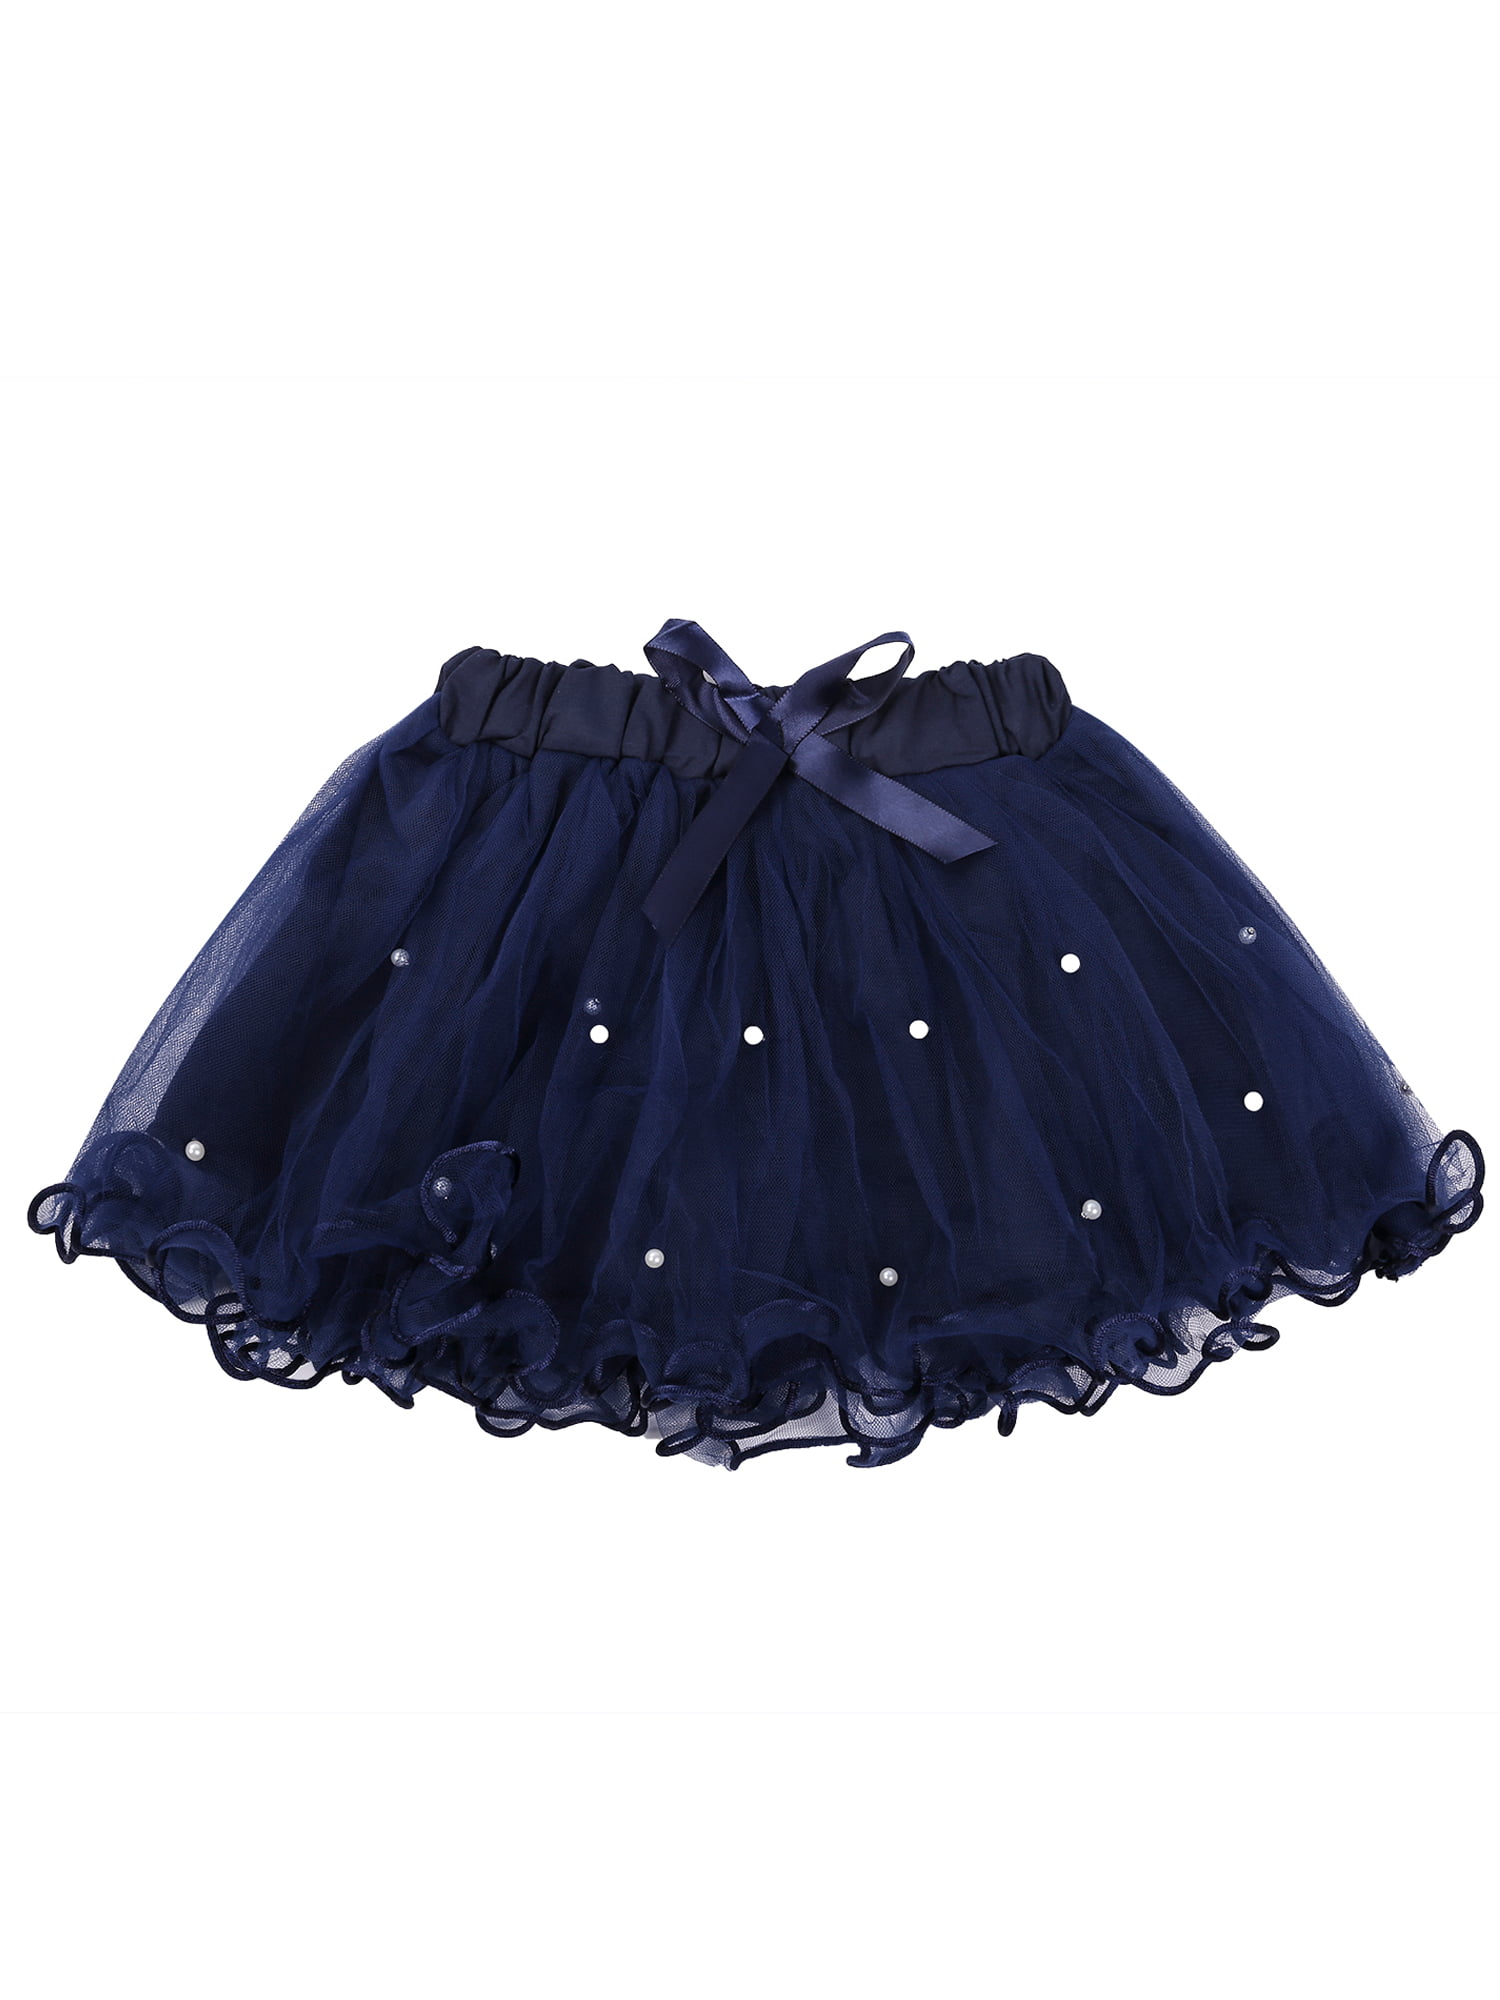 NEW Gap Kids Girls Skirt Gold Cream Floral Lace Tutu Ruffle Size 4 Regular NWT 